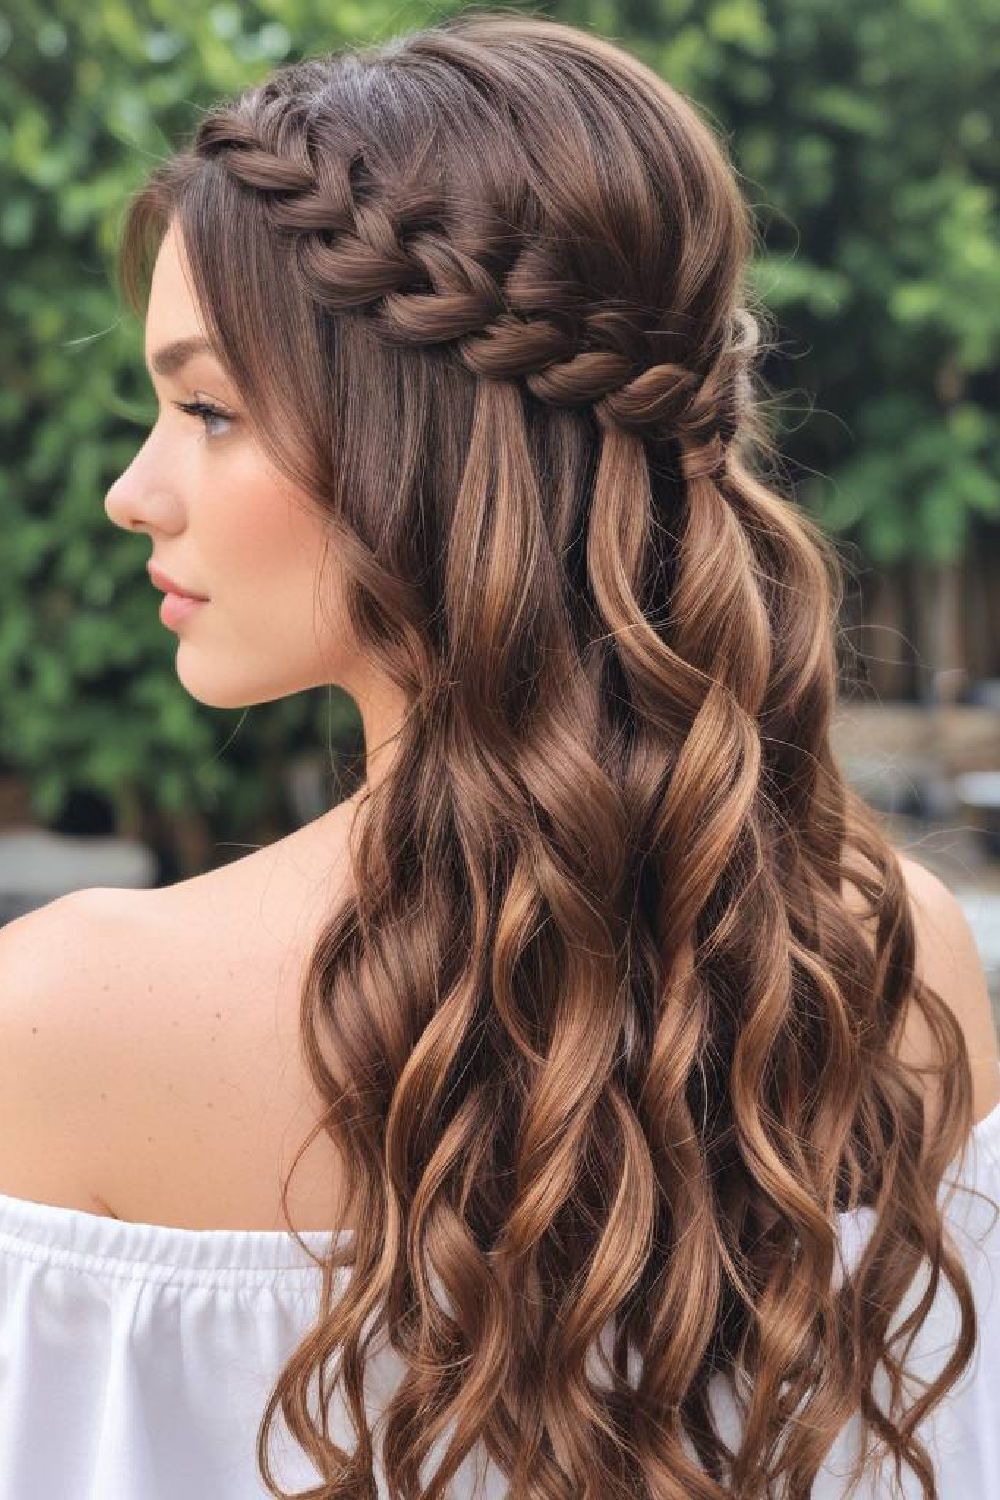 waterfall braids hairstyle